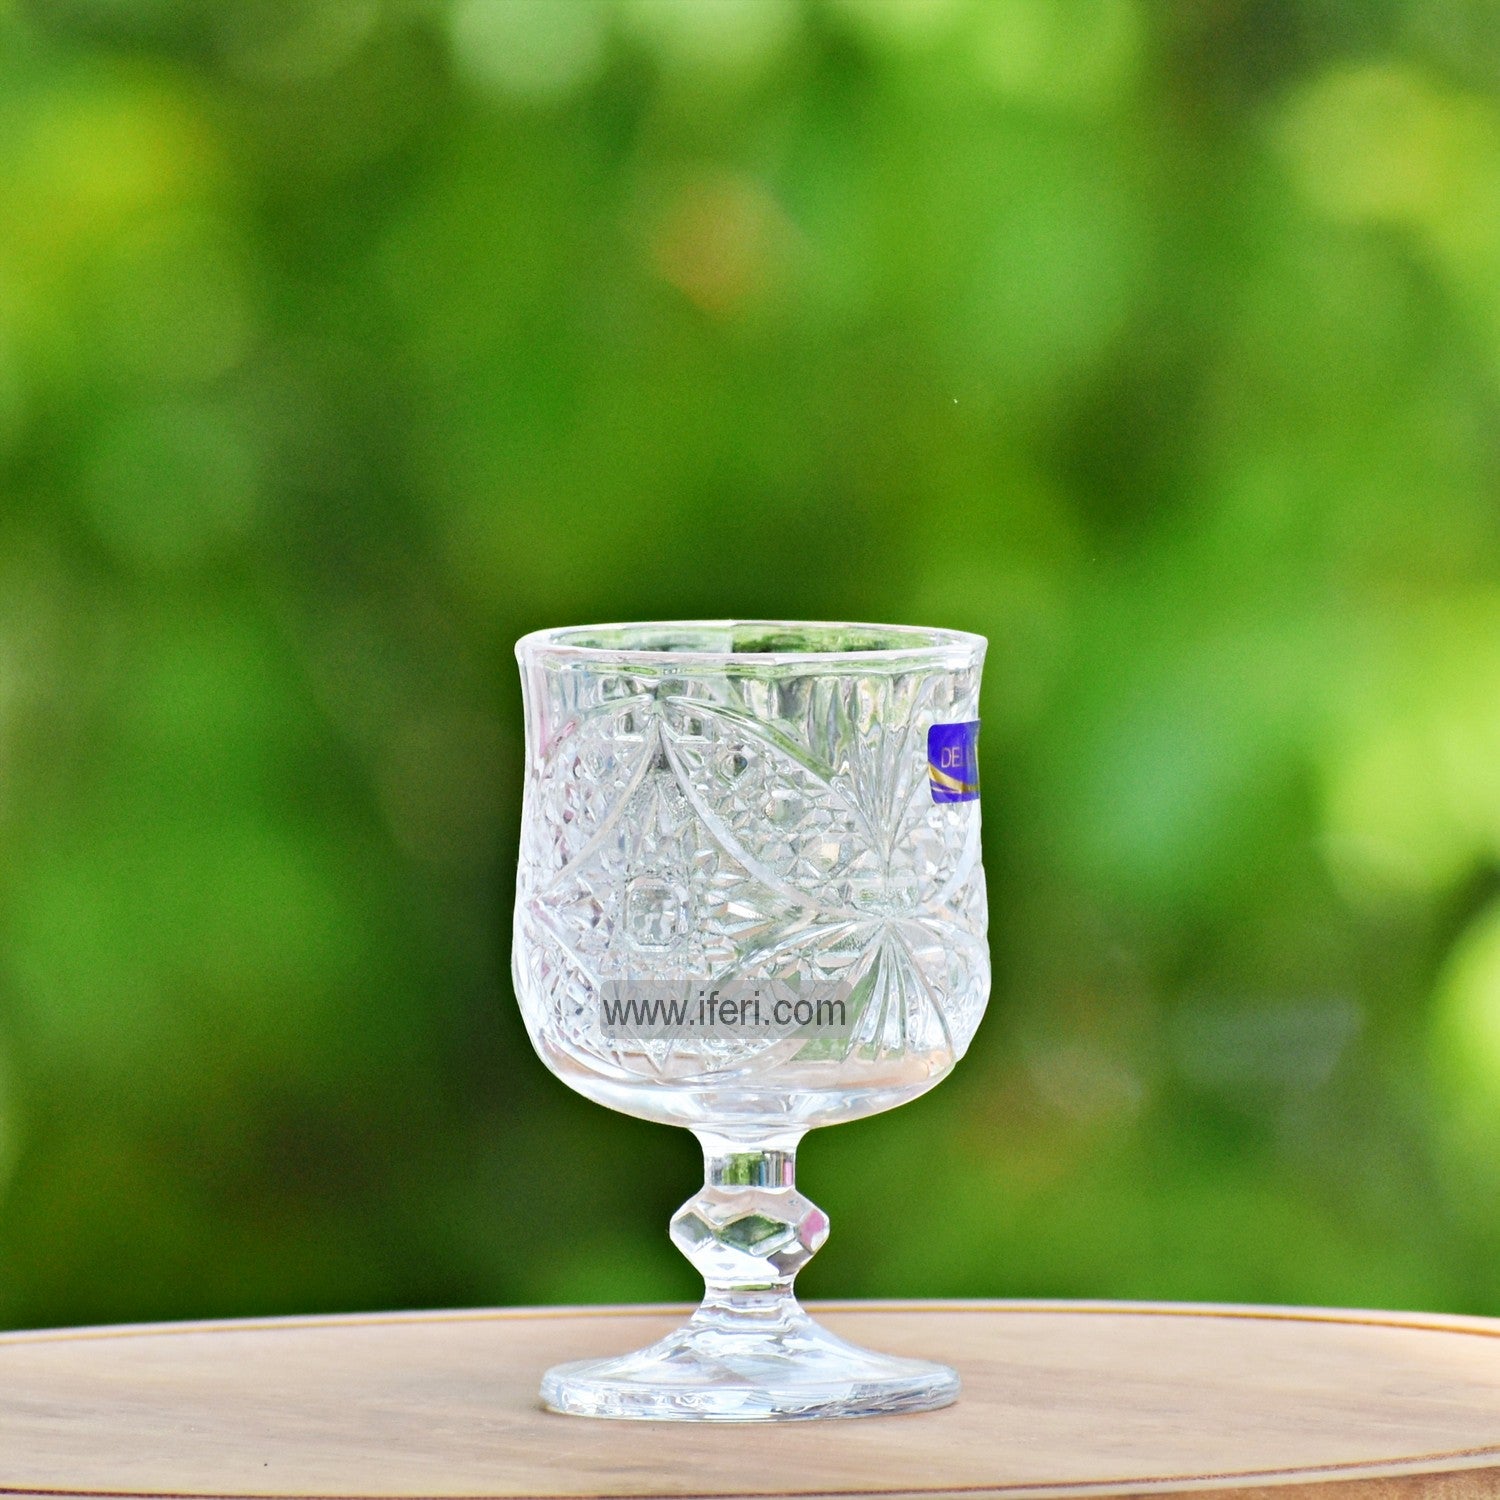 Buy Water Juice Glass Set Online from iferi.com in Bangladesh